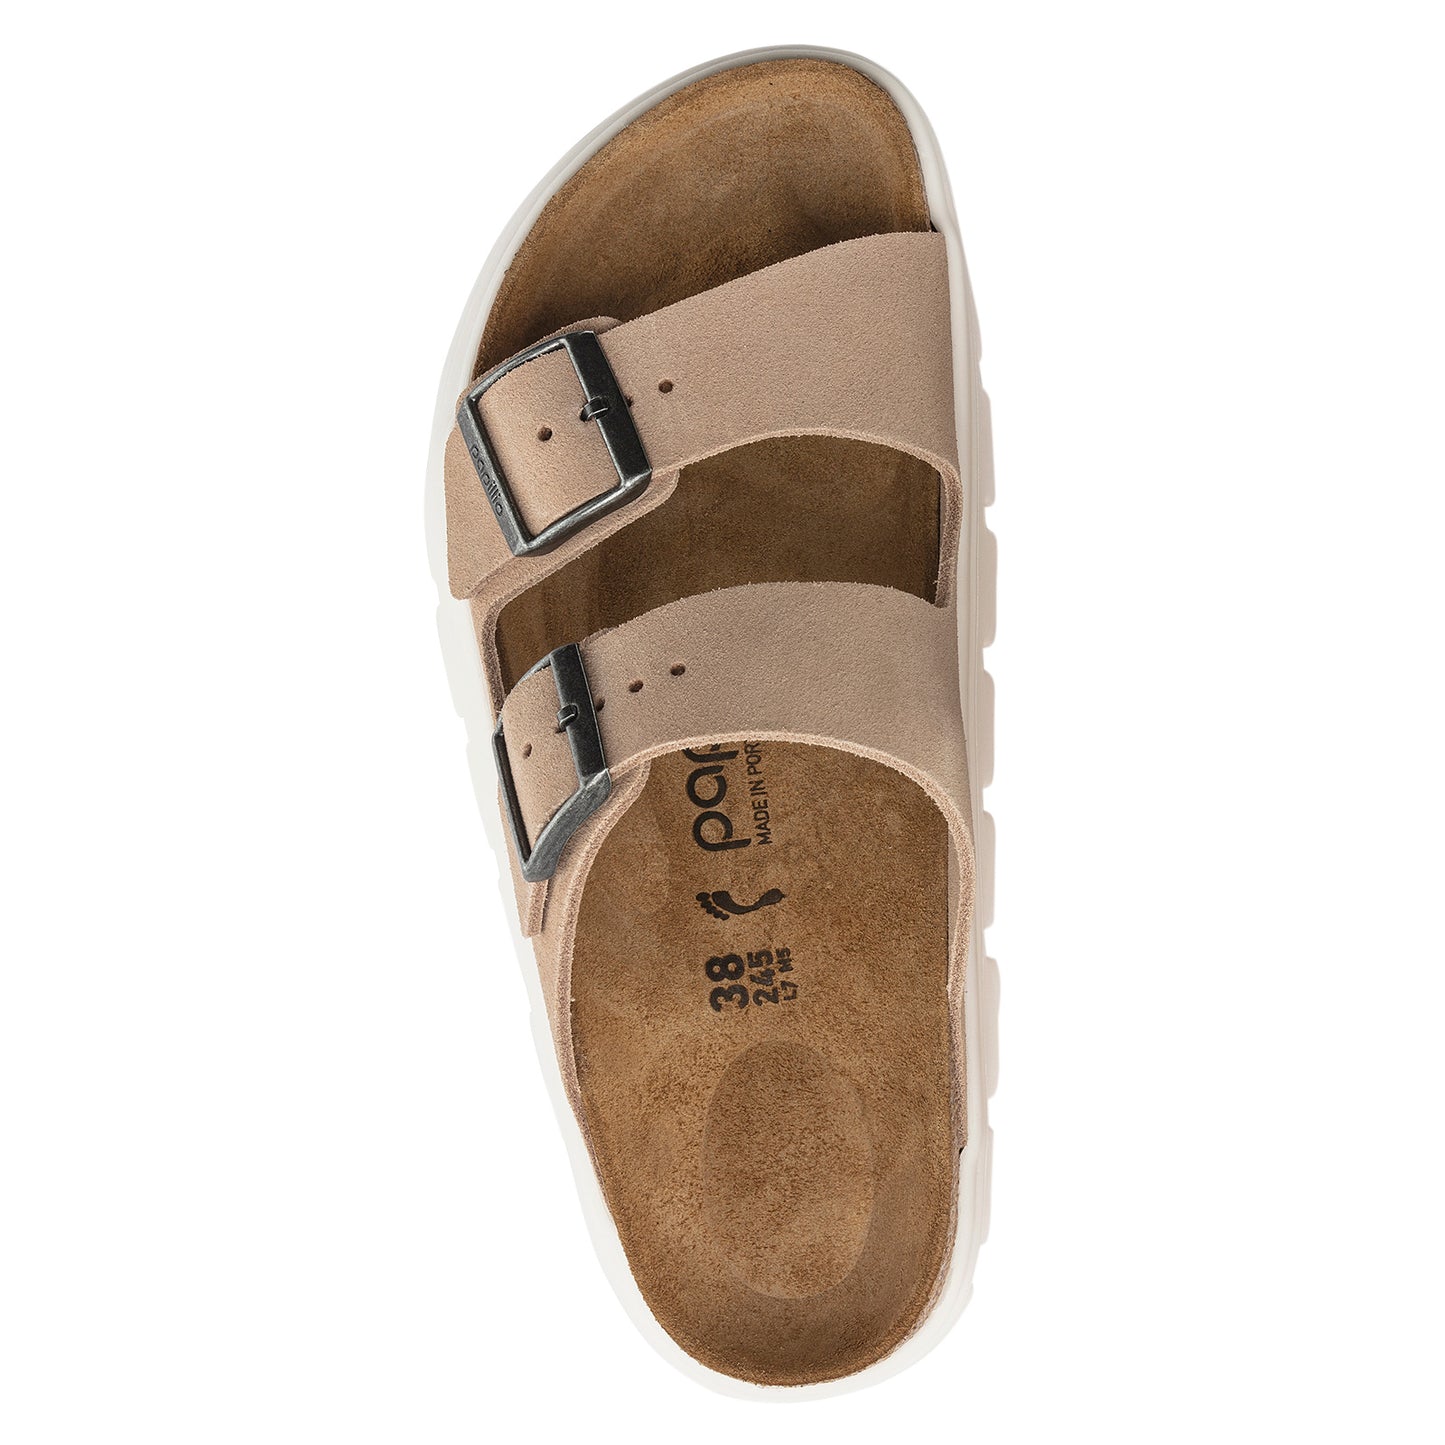 Peltz Shoes  Women's Birkenstock Arizona Chunky Sandal - Narrow Fit SAND 1024 950 N